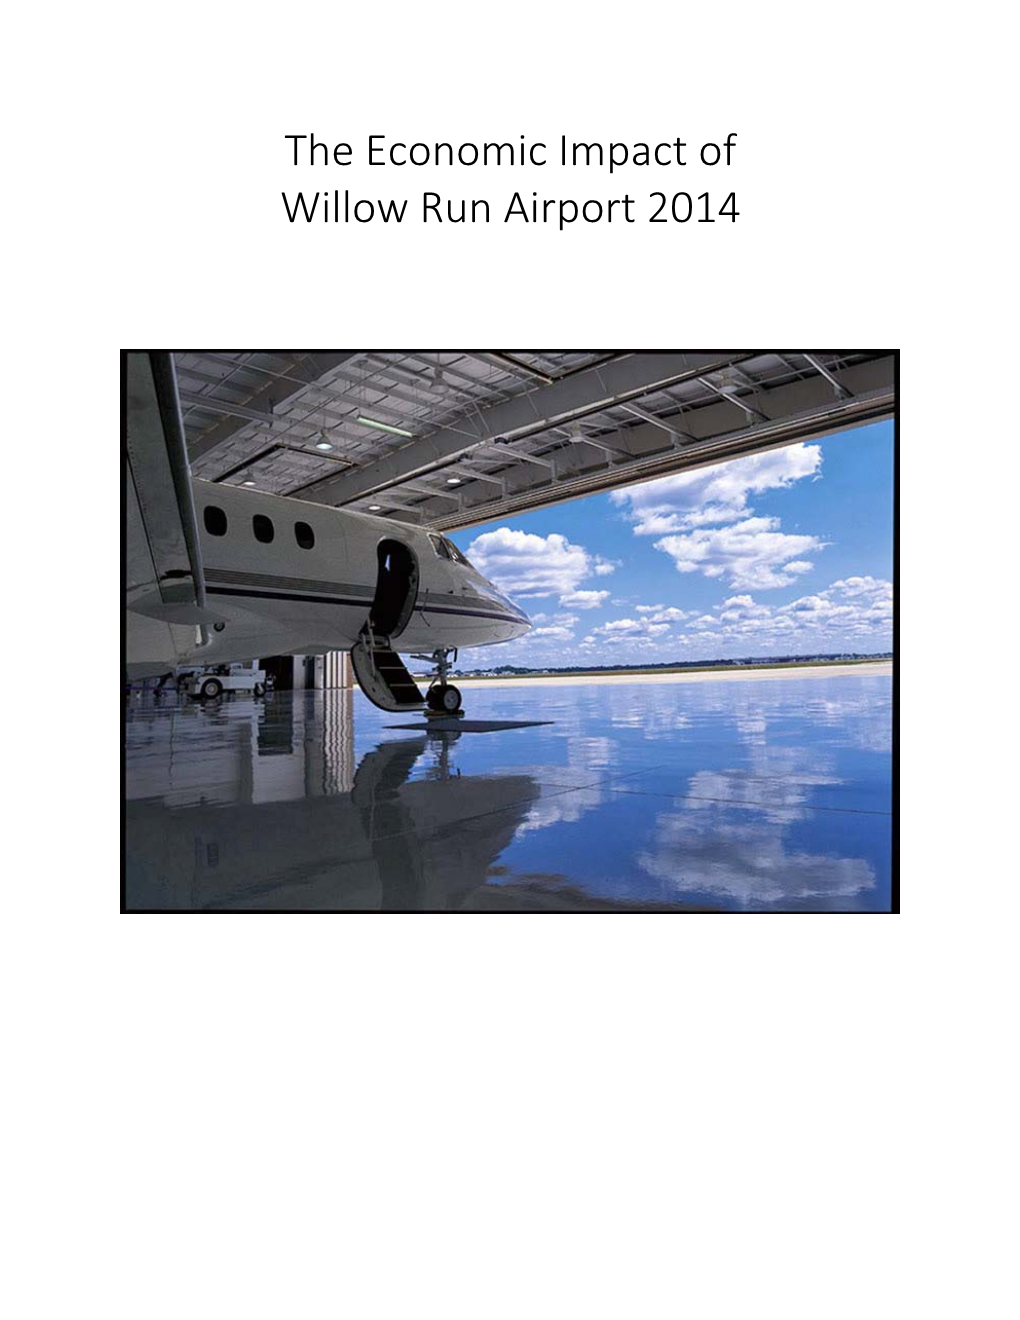 The Economic Impact of Willow Run Airport 2014